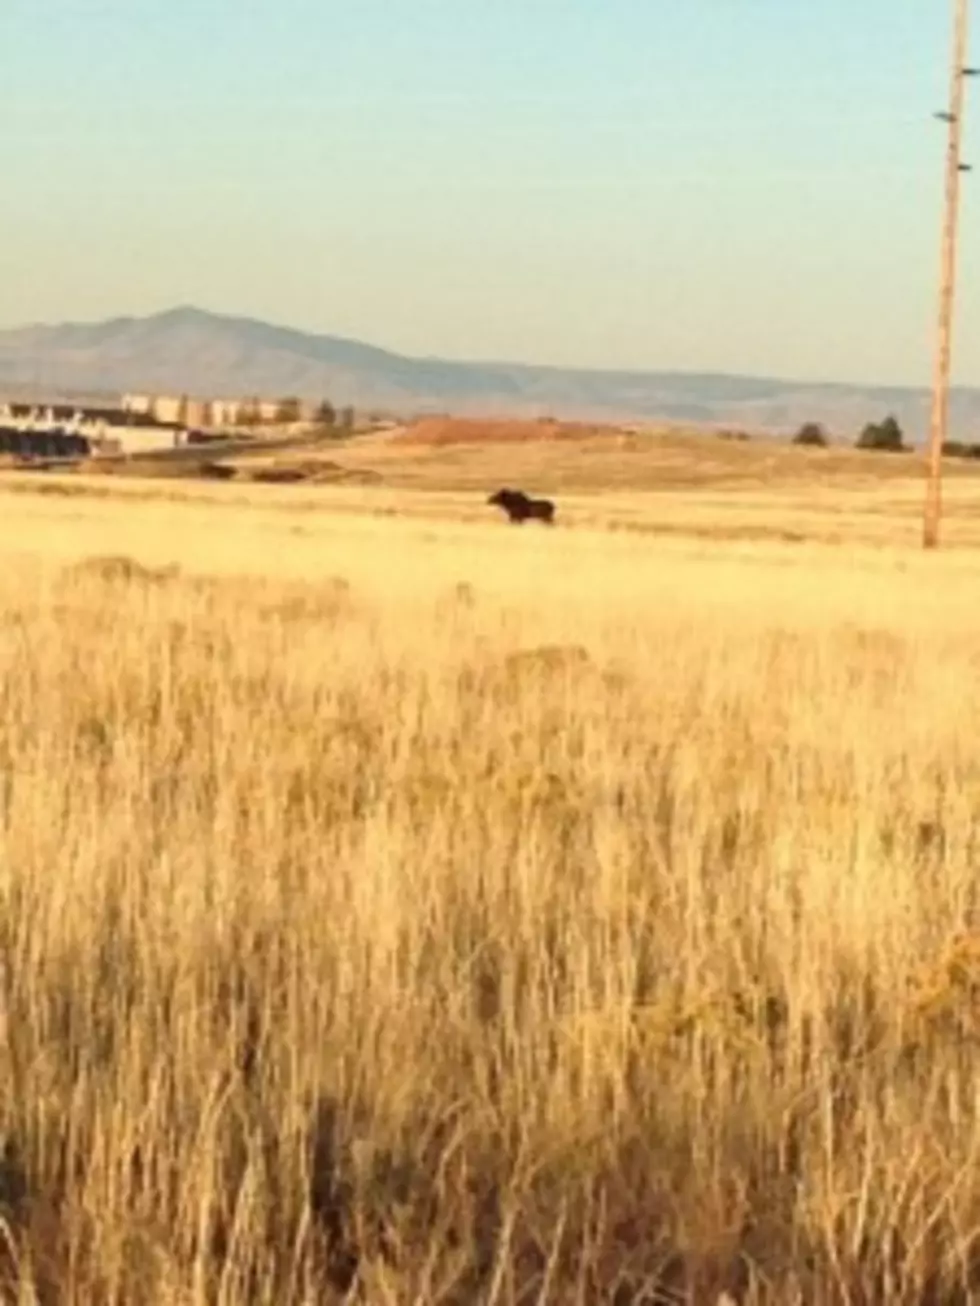 Moose Incident In Laramie Serves As Reminder Of Wildlife Safety